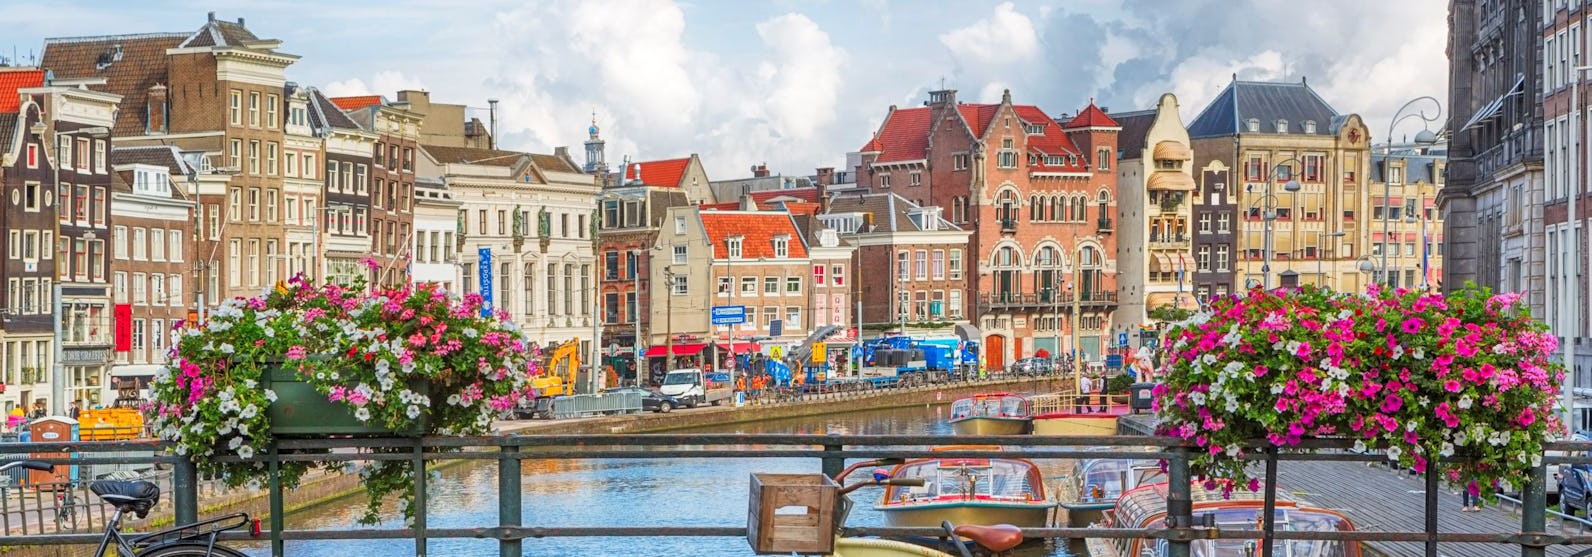 Amsterdam-The-Netherlands